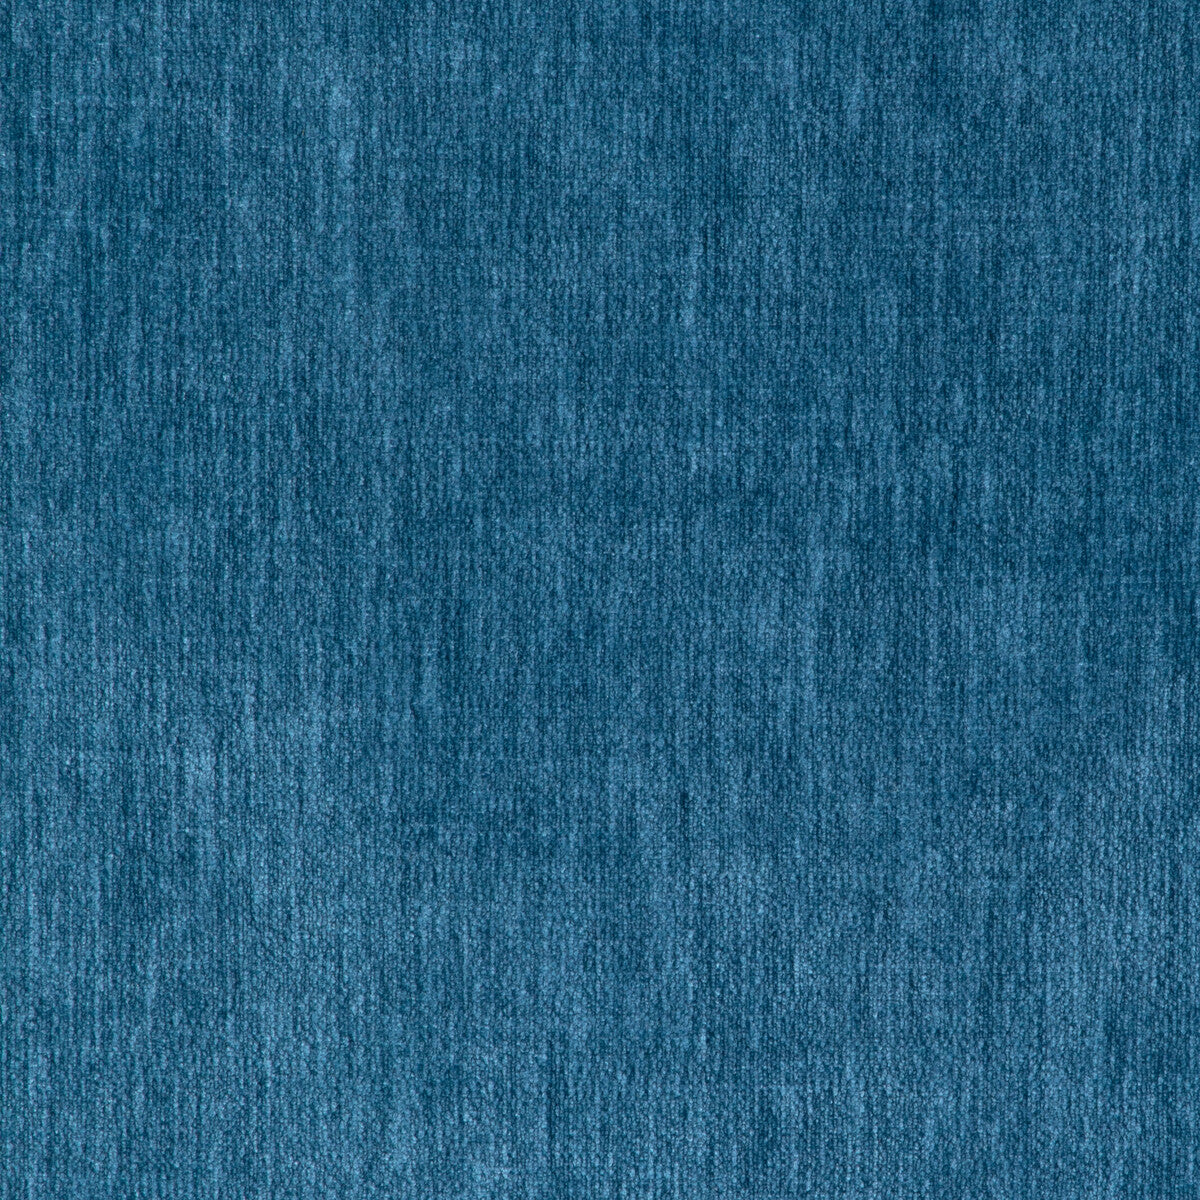 Kravet Smart fabric in 36676-5 color - pattern 36676.5.0 - by Kravet Smart in the Performance Kravetarmor collection